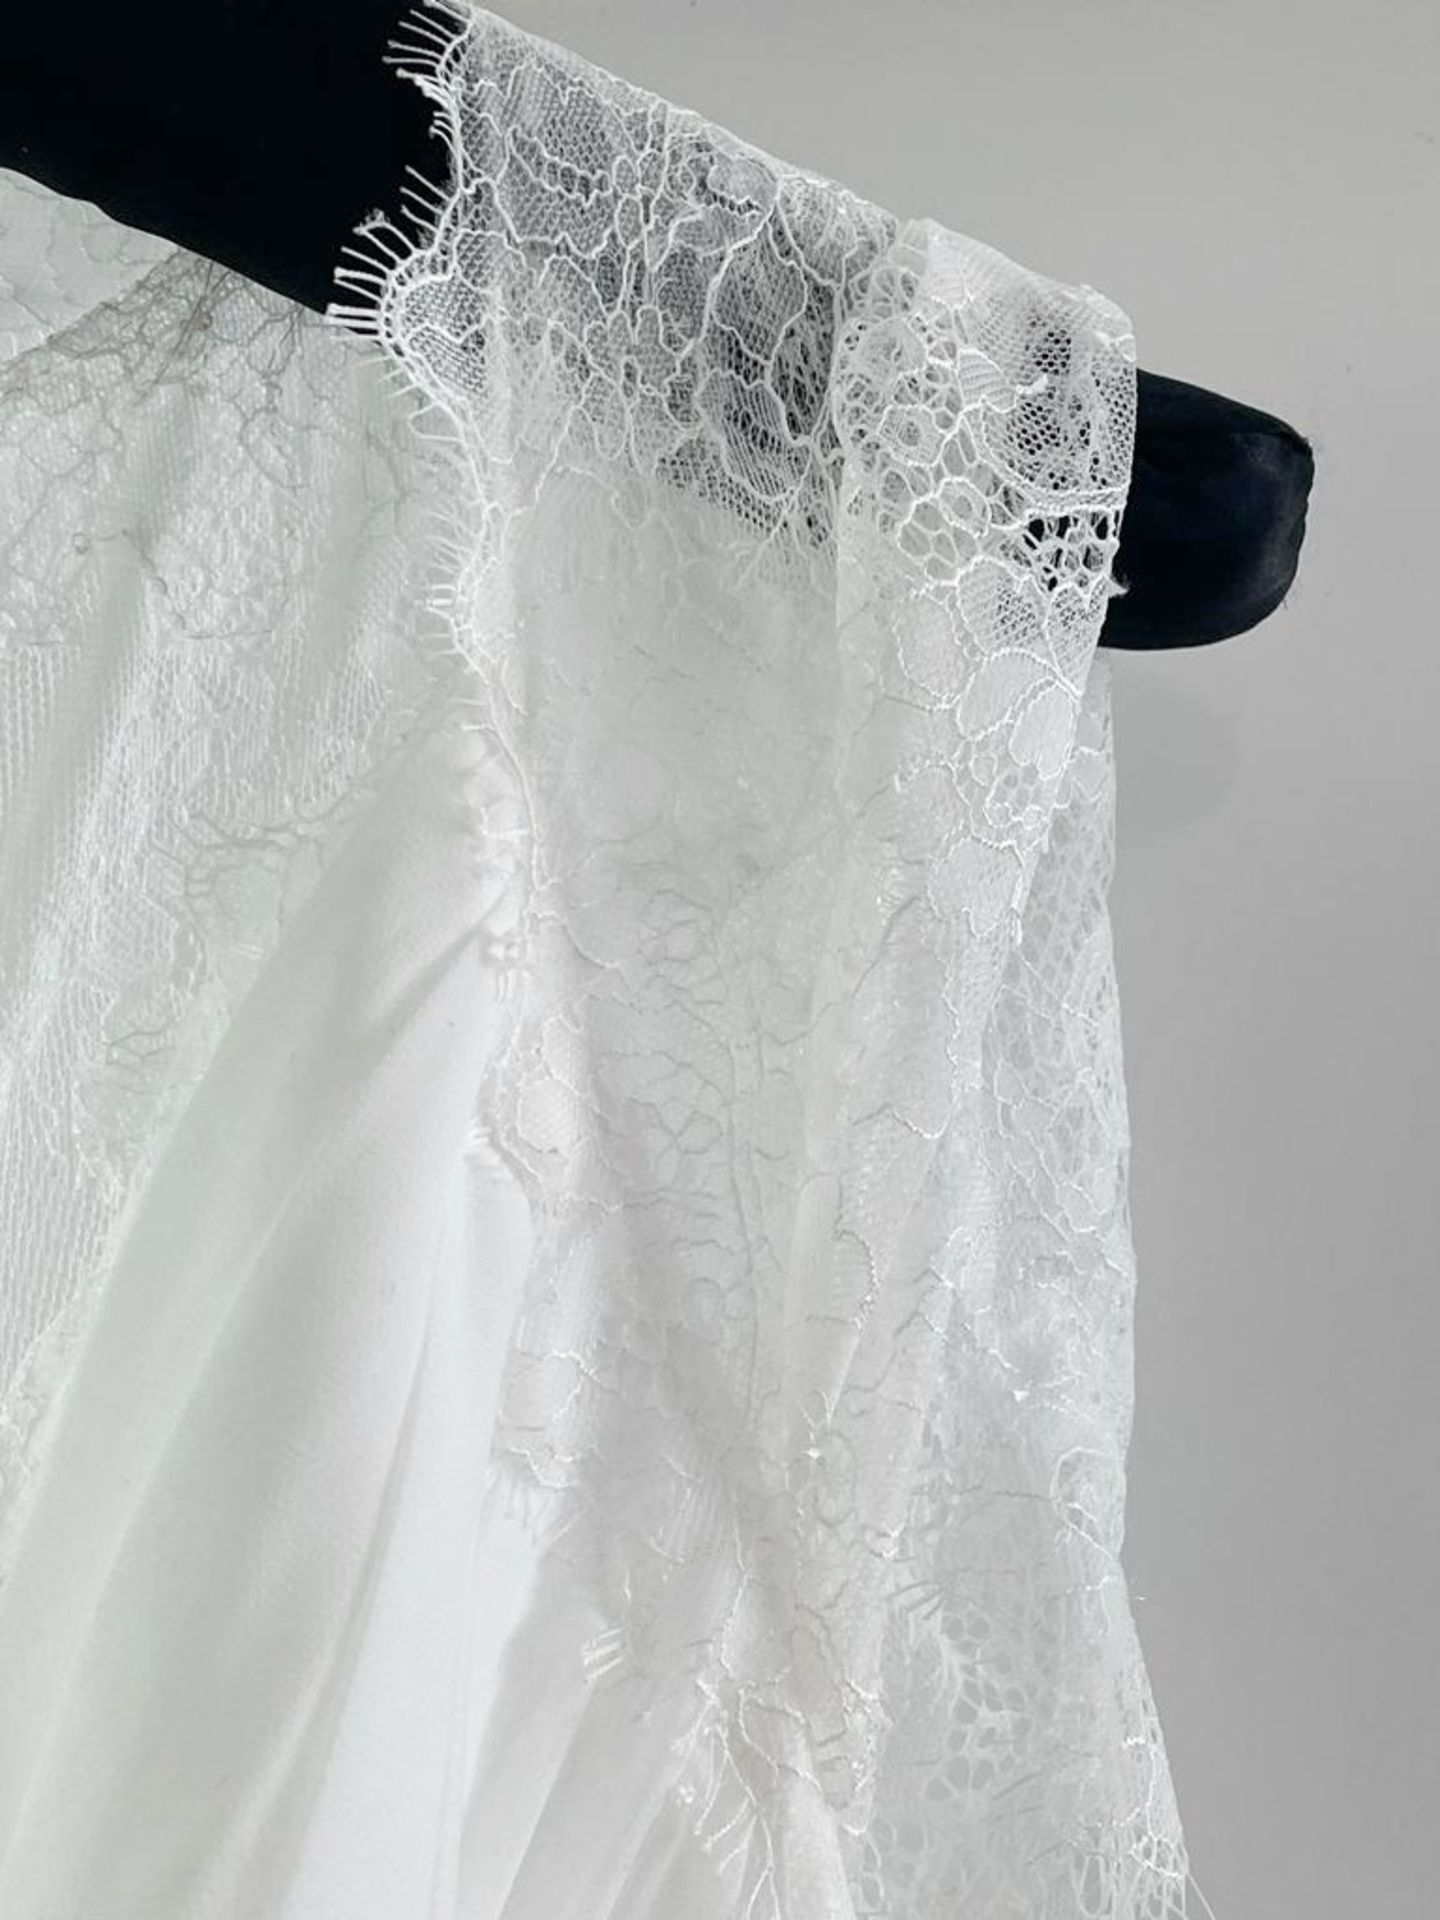 1 x PRONOVIAS 'Carlyle' Designer Goddess-style Wedding Dress Bridal Gown - Original RRP £1,660 - Image 3 of 15